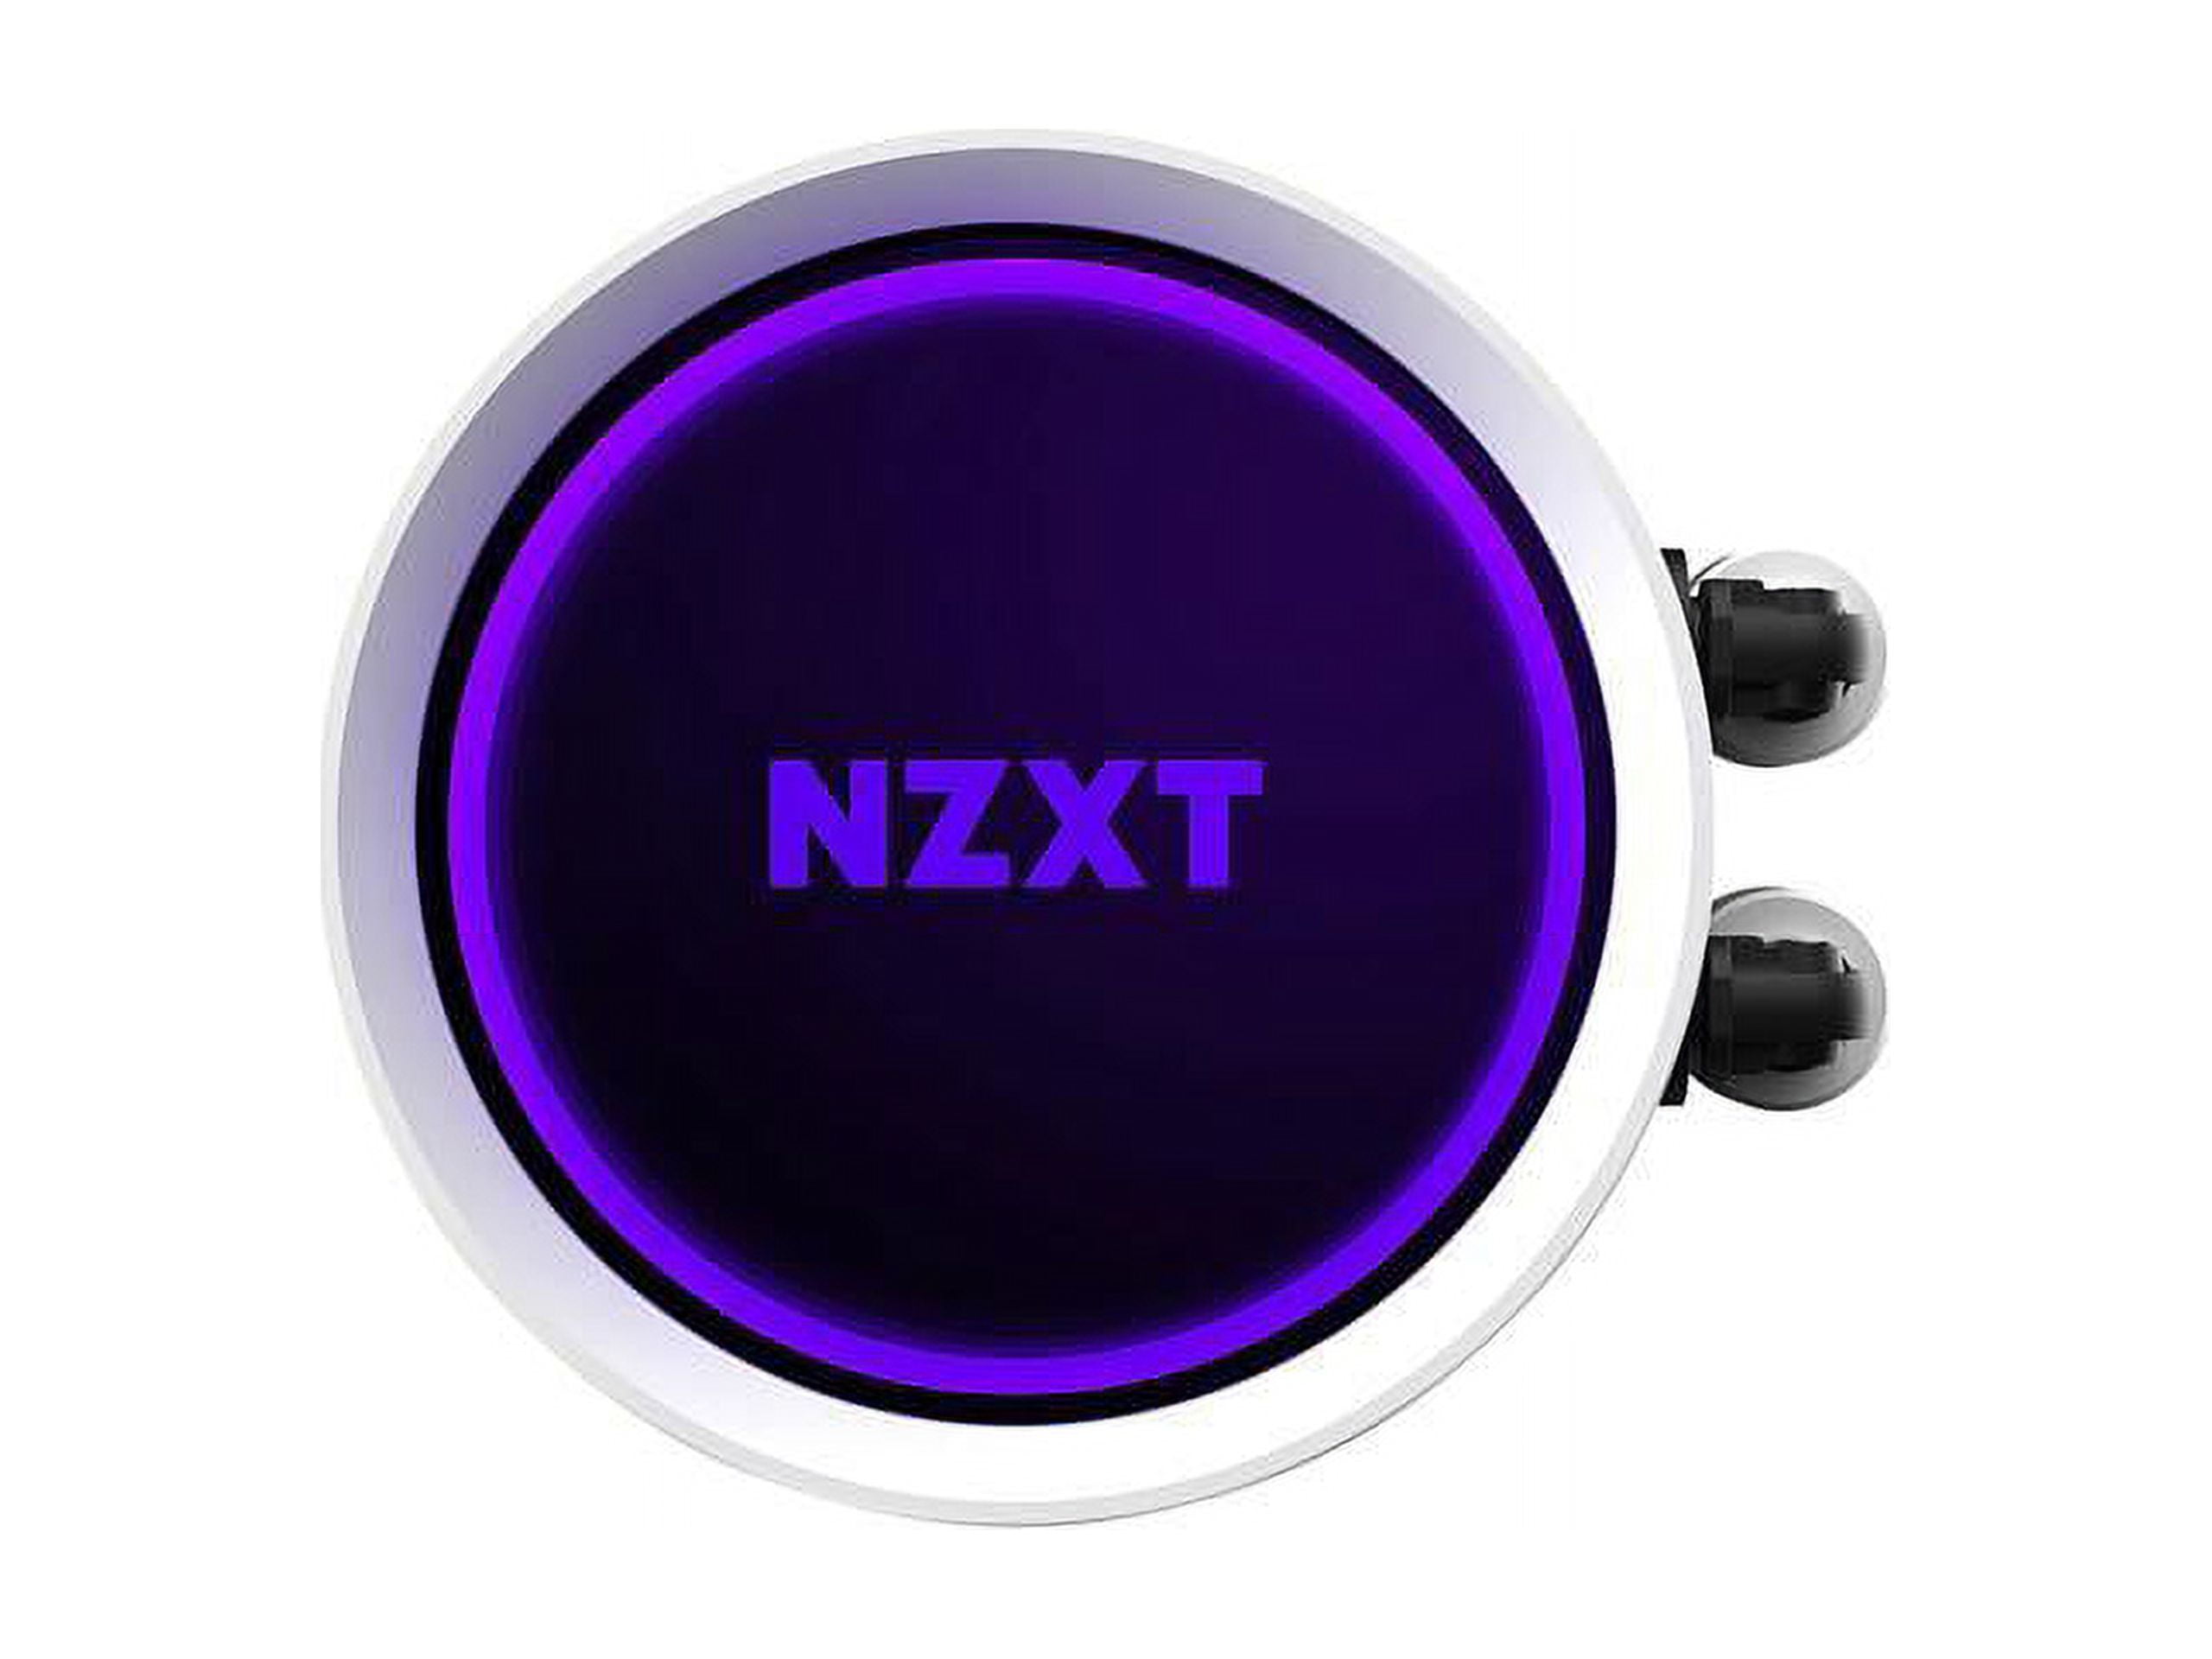  NZXT Kraken X53 RGB 240mm - RL-KRX53-R1 - AIO RGB CPU Liquid  Cooler - Rotating Infinity Mirror Design - Improved Pump - Powered by CAM  V4 - RGB Connector - AER